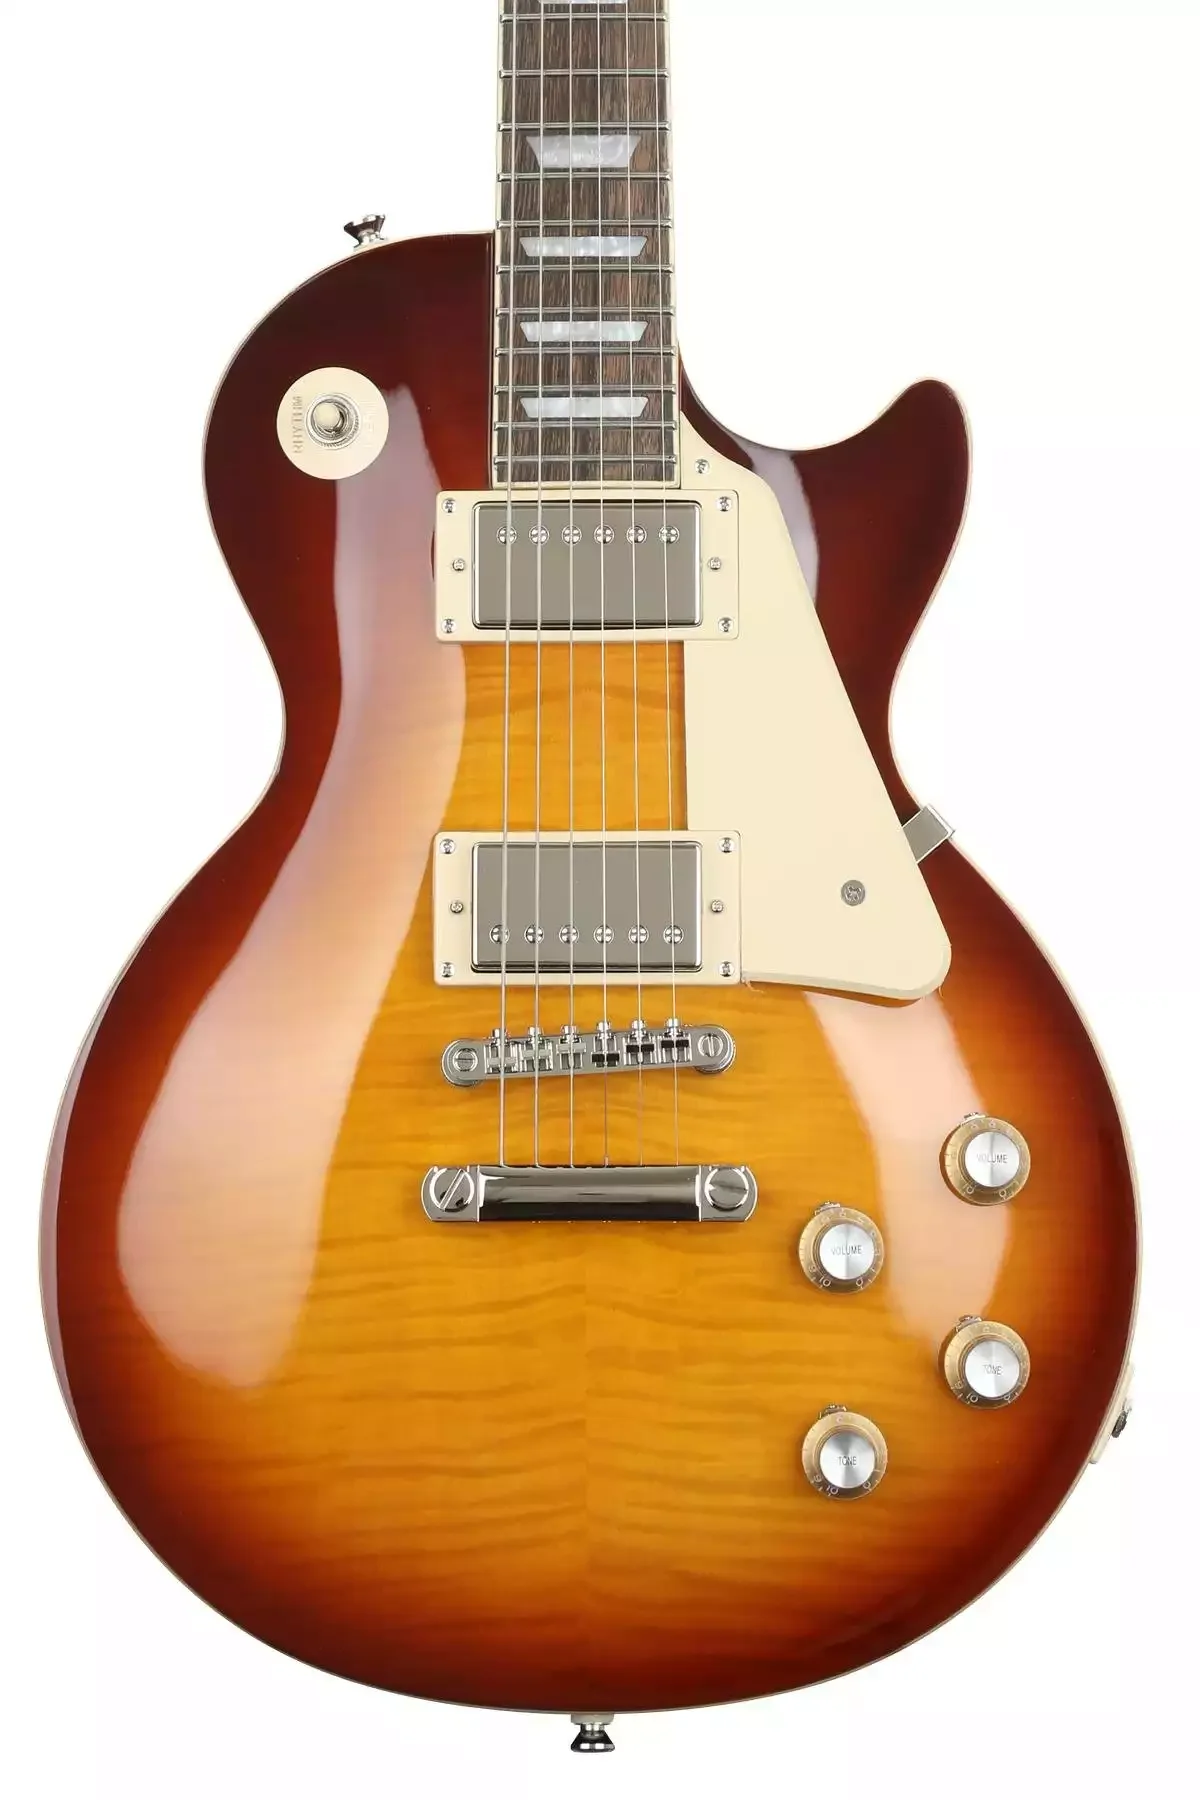 Epiphone Les Paul Standard '60s Electric Guitar